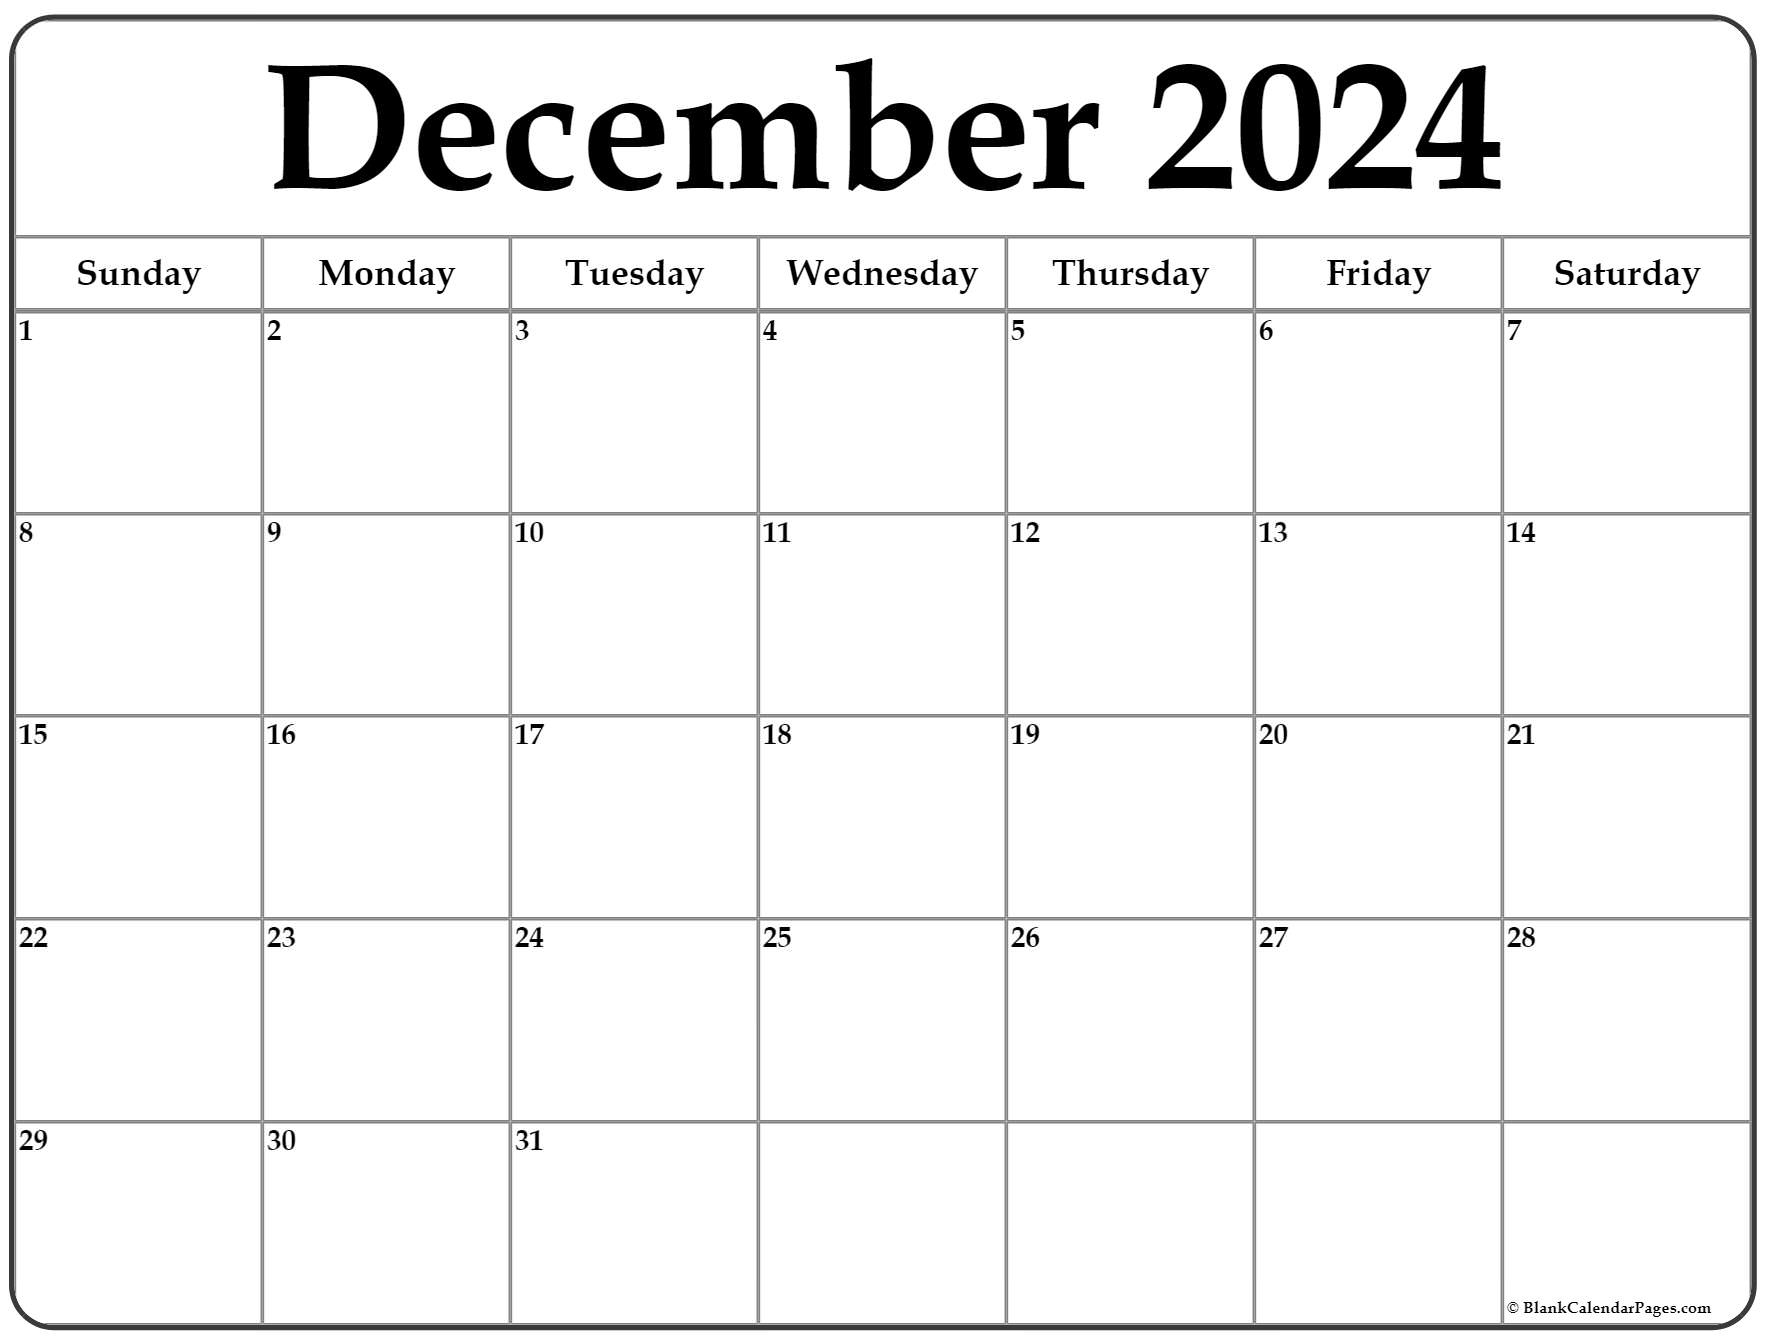 December 2024 Calendar | Free Printable Calendar within Free Printable Appointment Calendar December 2024